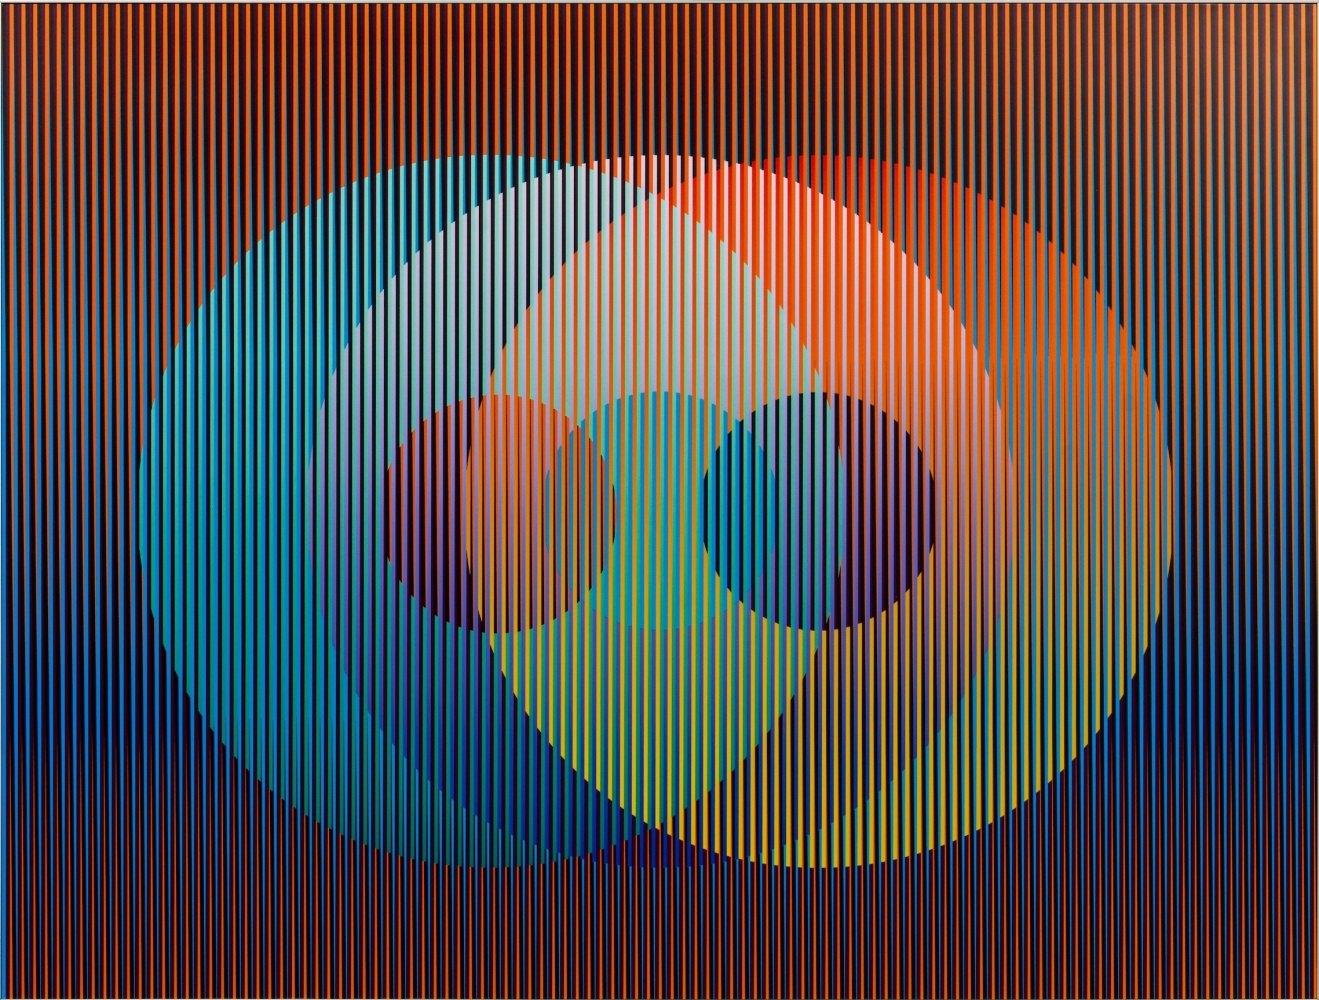 Color Aditivo Panam C&amp;iacute;rculos 7, 2010
Cromografía sobre aluminio
60&amp;nbsp;x 80&amp;nbsp;cm
23 79/127&amp;nbsp;x 31 63/127&amp;nbsp;in
Edici&amp;oacute;n de 8